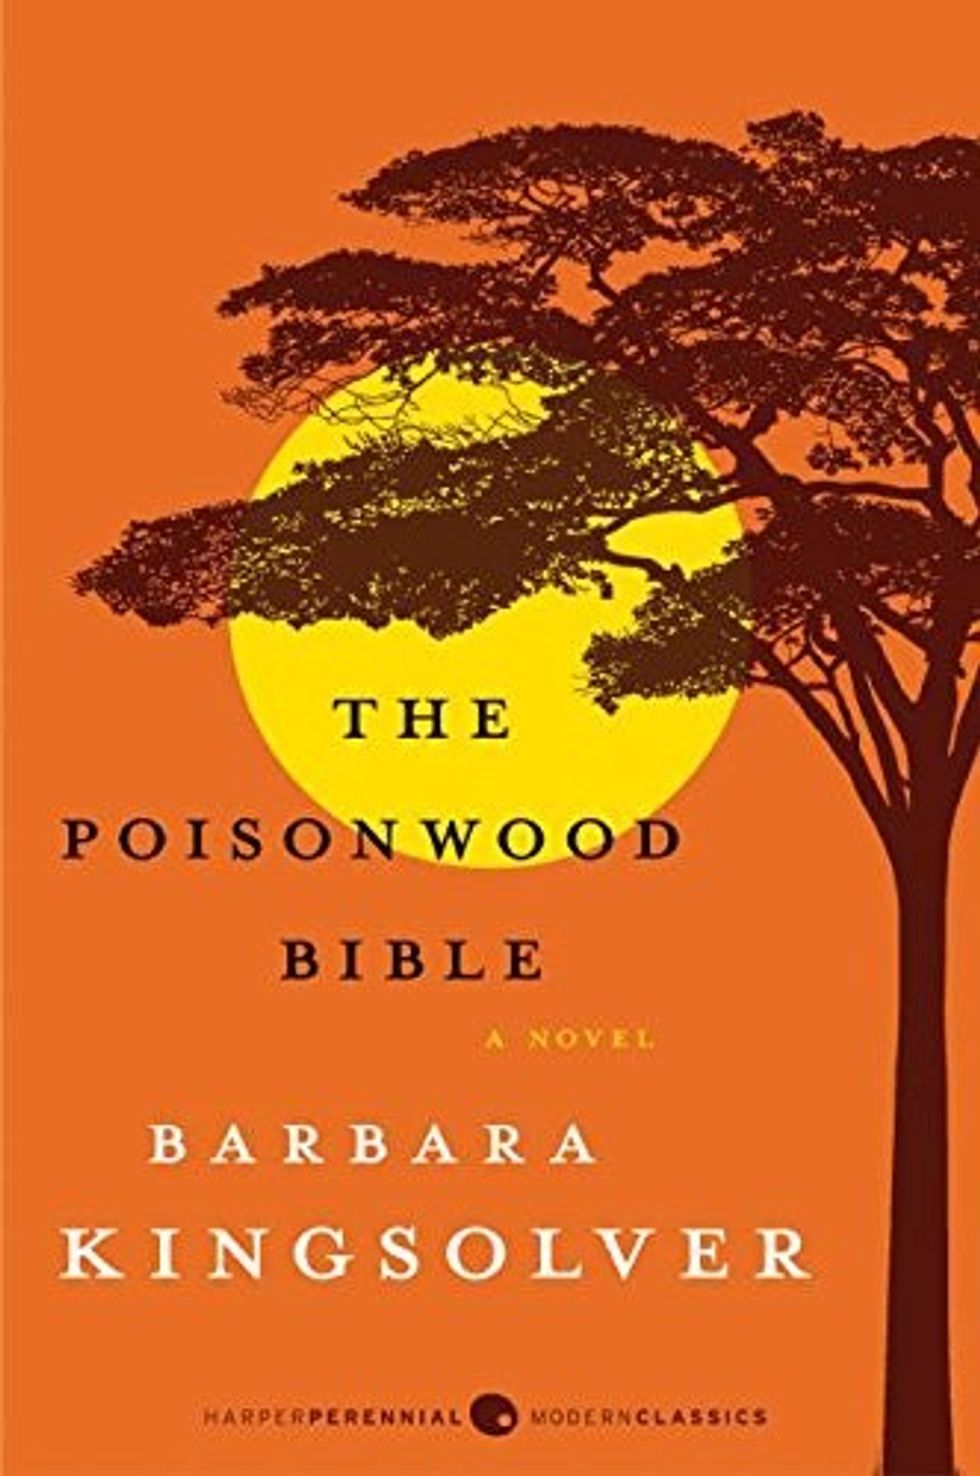 "The Poisonwood Bible" by Barbara Kingsolver